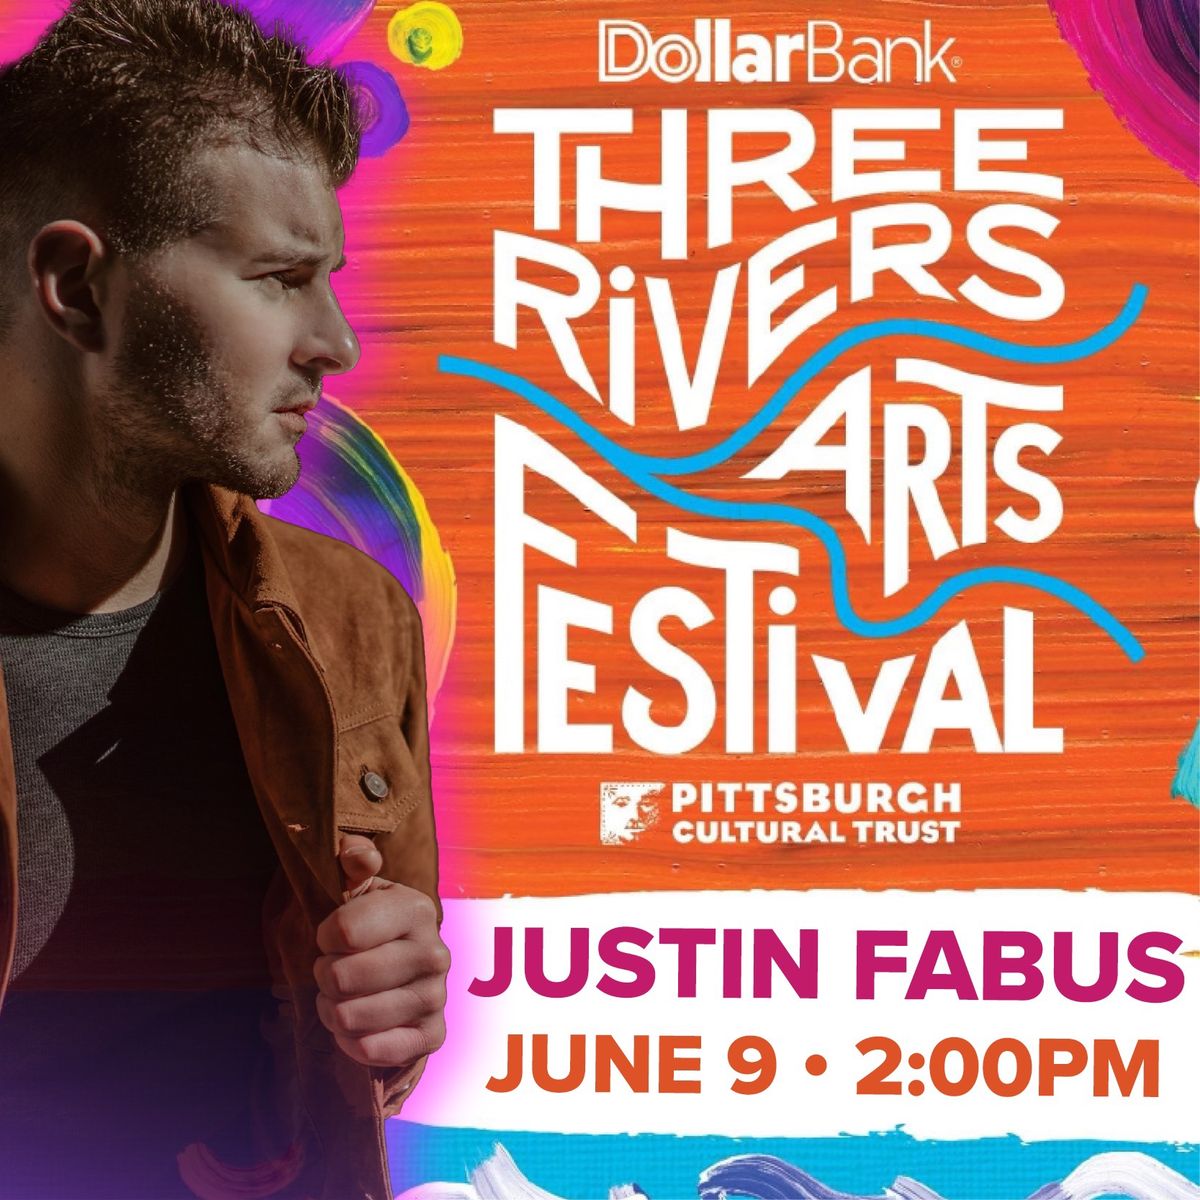 Justin Fabus - Dollar Bank Three Rivers Arts Festival 